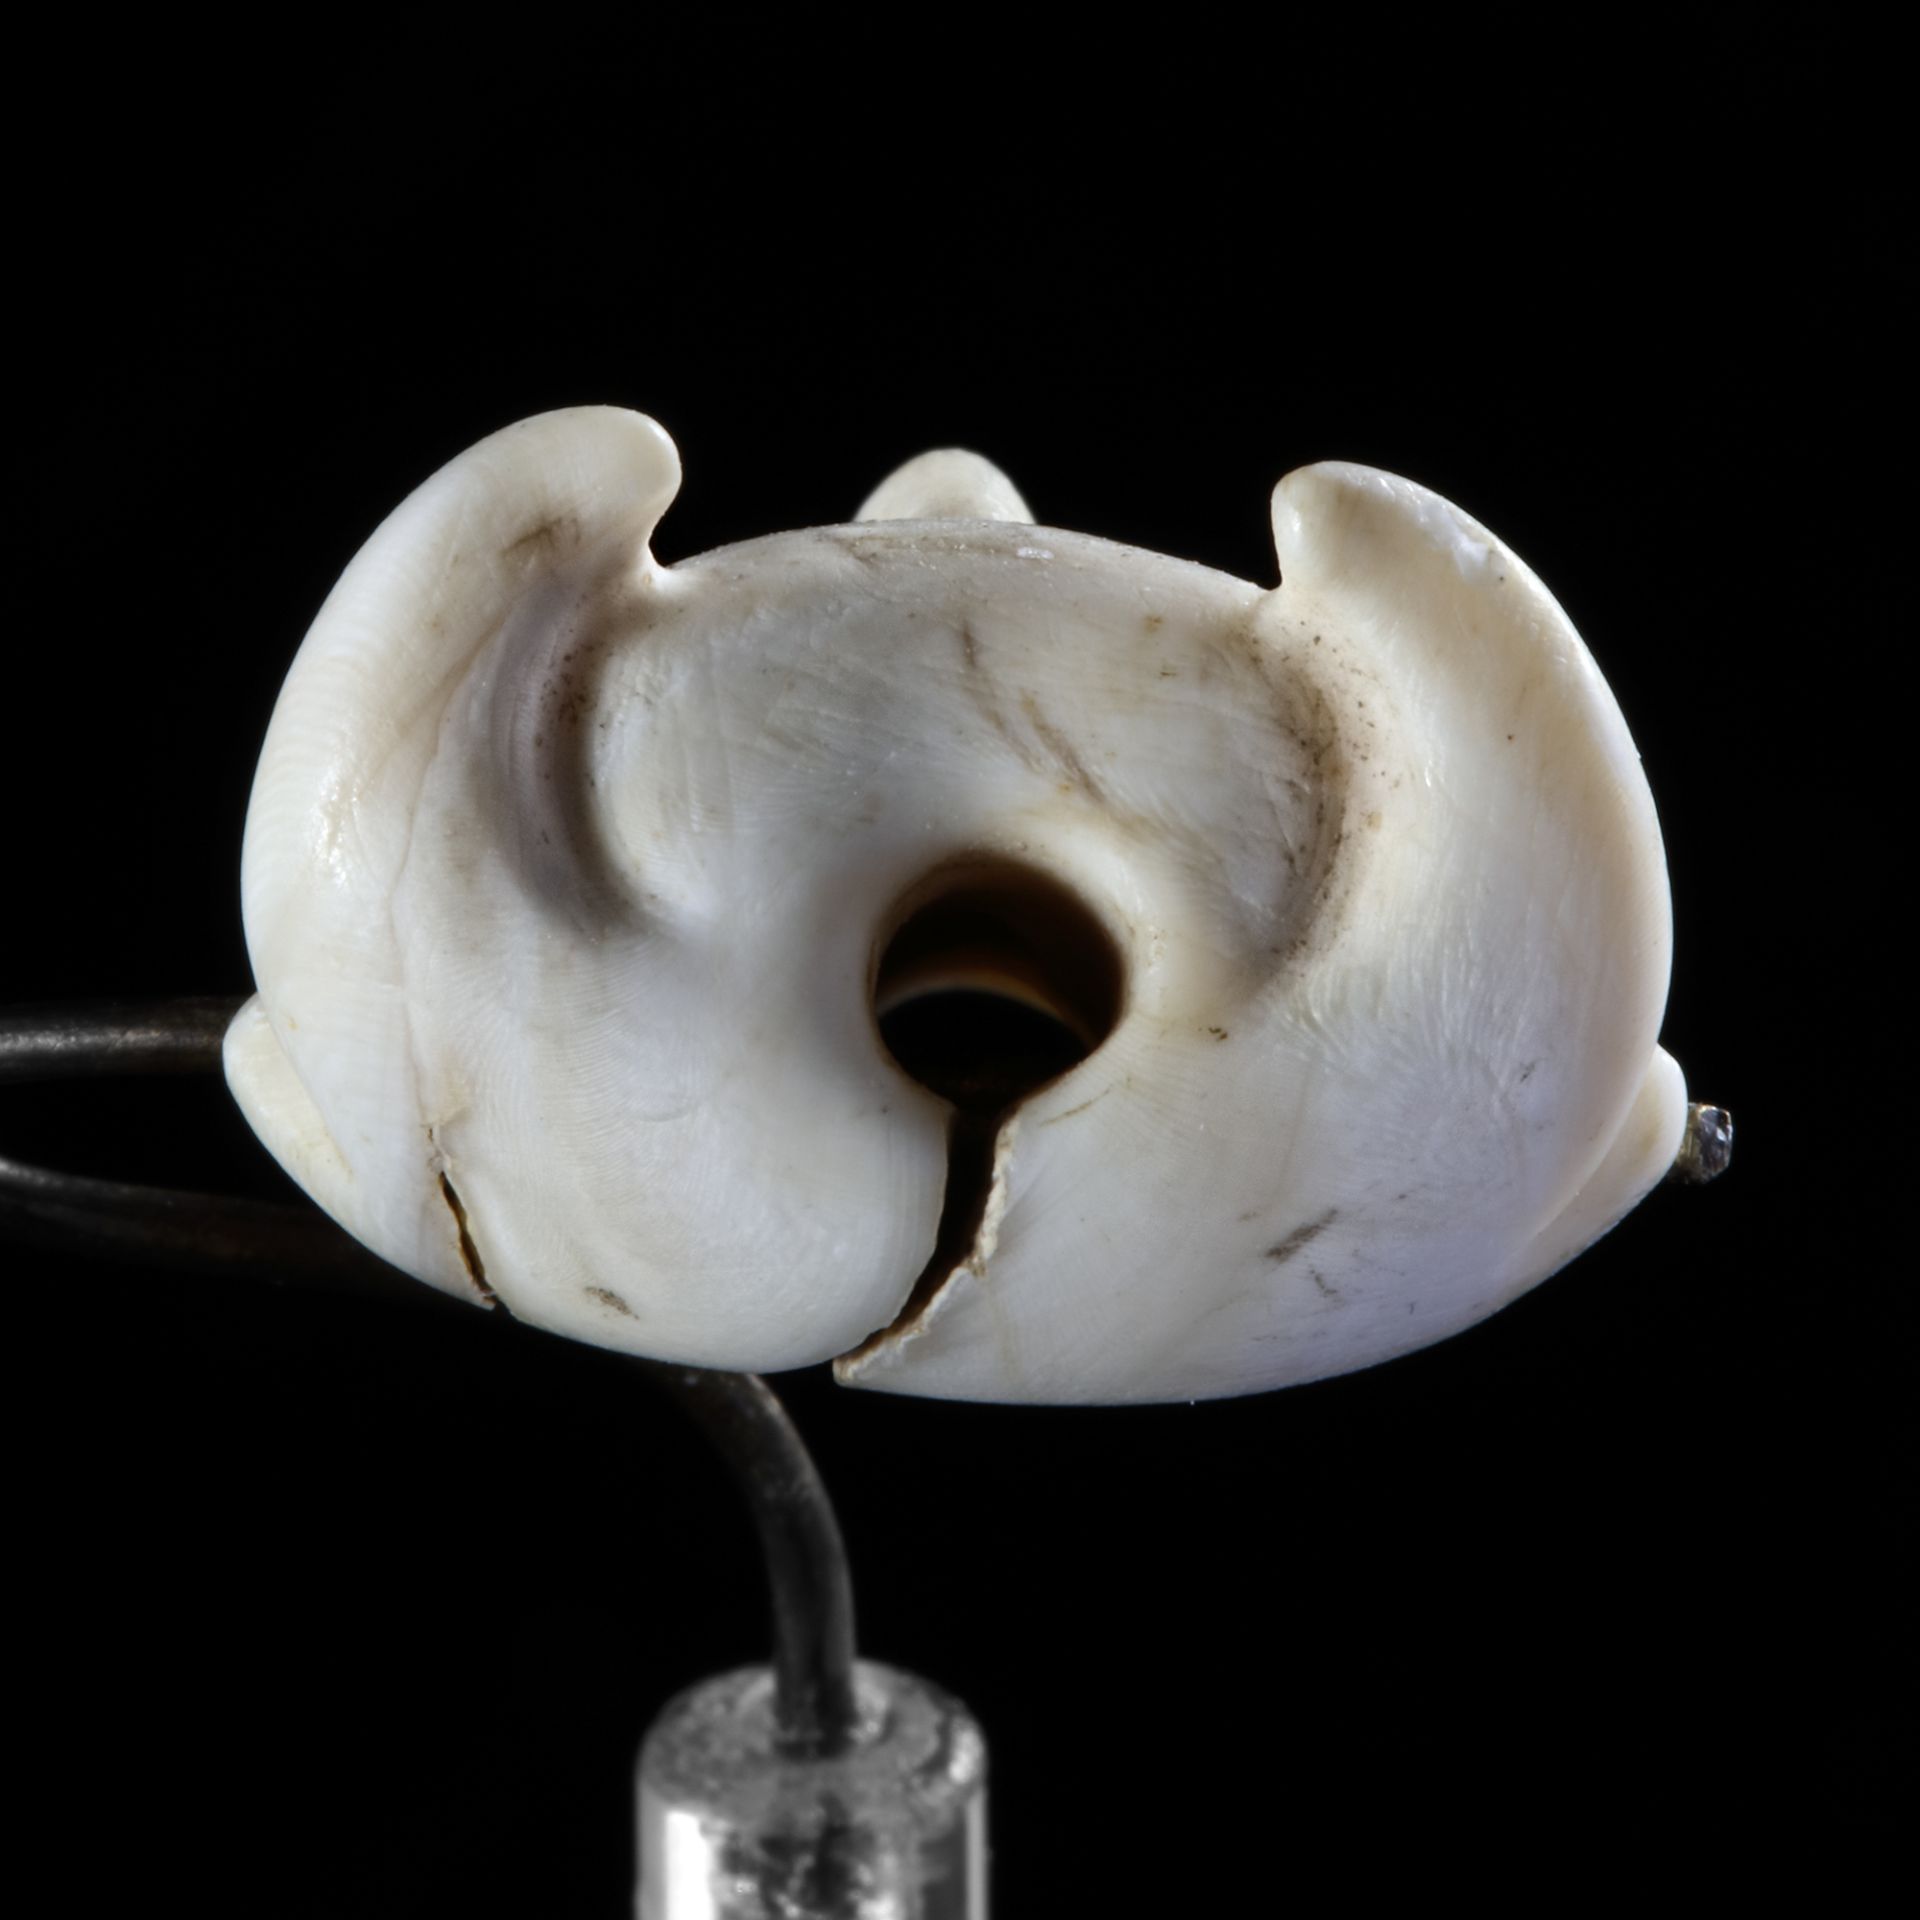 A SMALL AMULITIC HEAD OF A MAN HEADED BULL, NEAR EASTERN, 3RD MILLENNIUM BC - Image 6 of 6